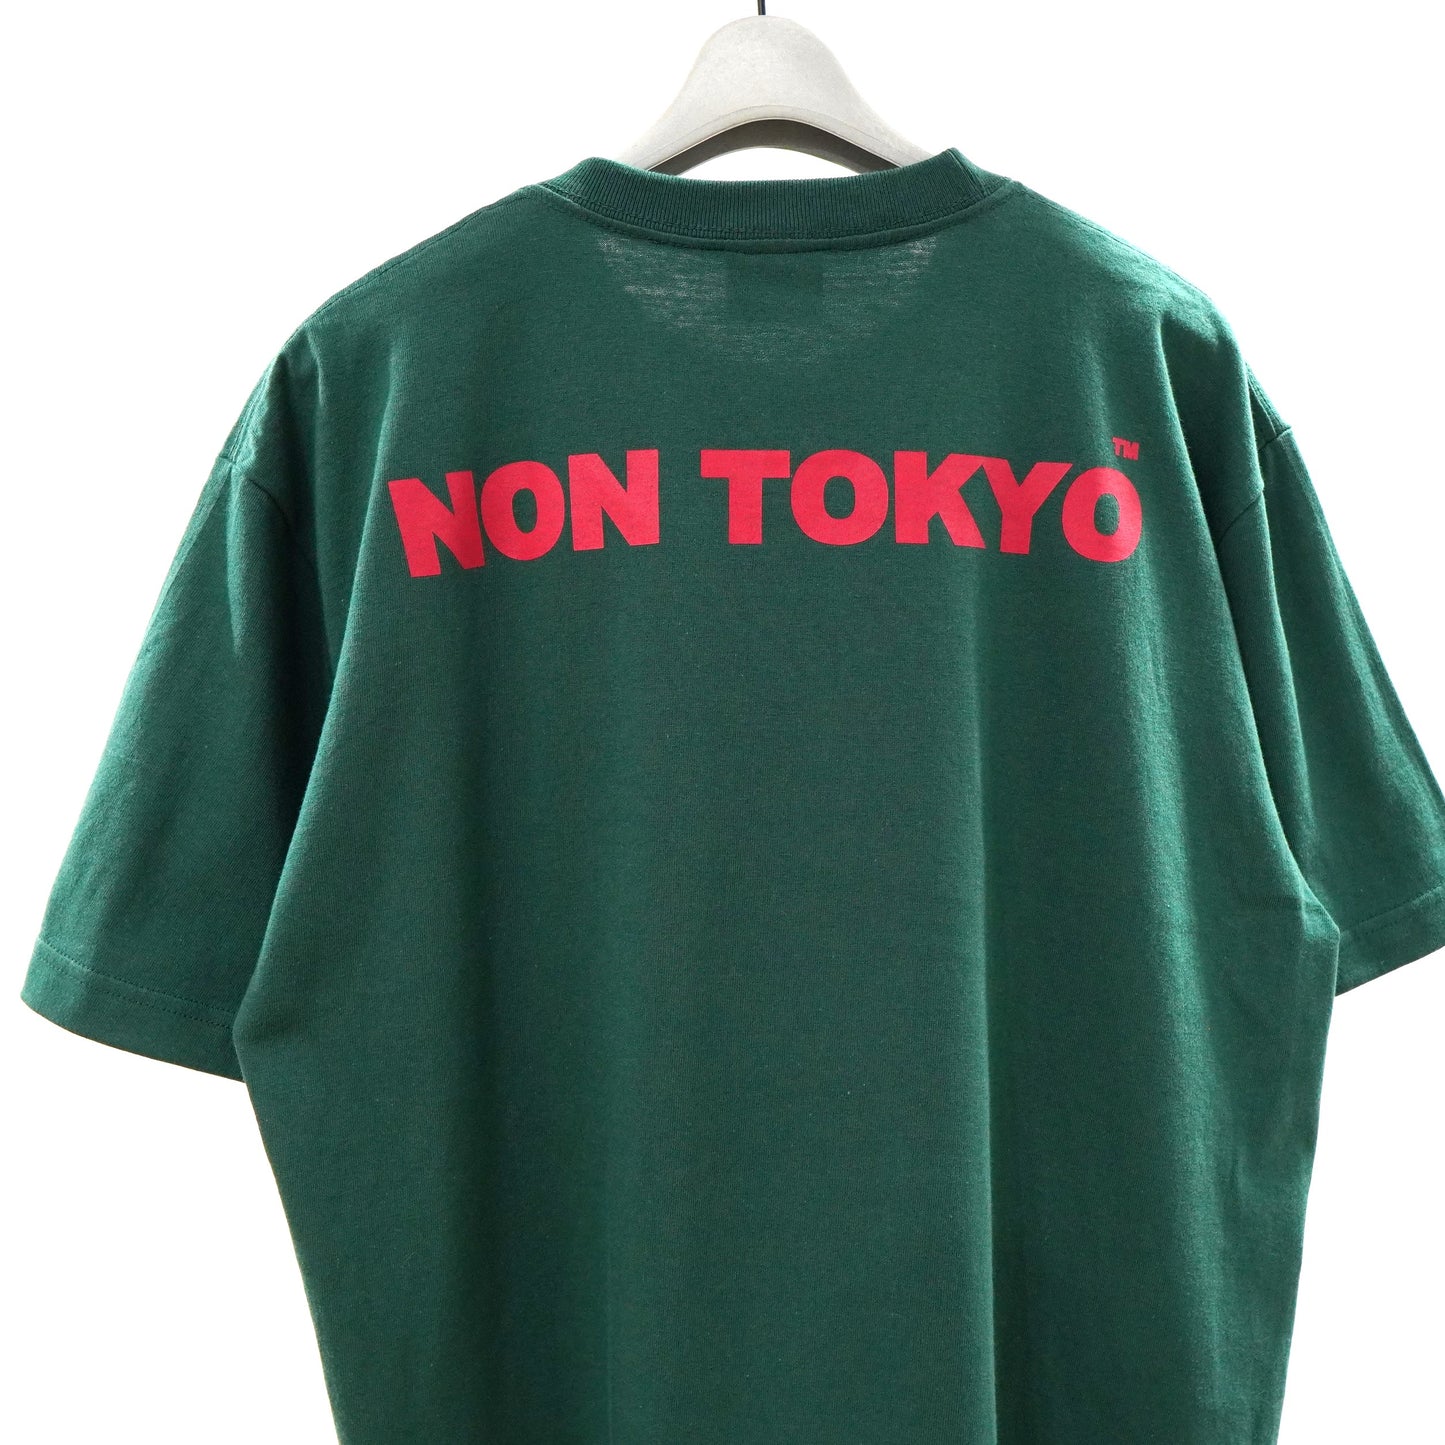 NON TOKYO / HAND PRINT T-SHIRT (WOOD MAN/GREEN) / 〈ノントーキョー〉ハンドプリントTシャツ (グリーン)